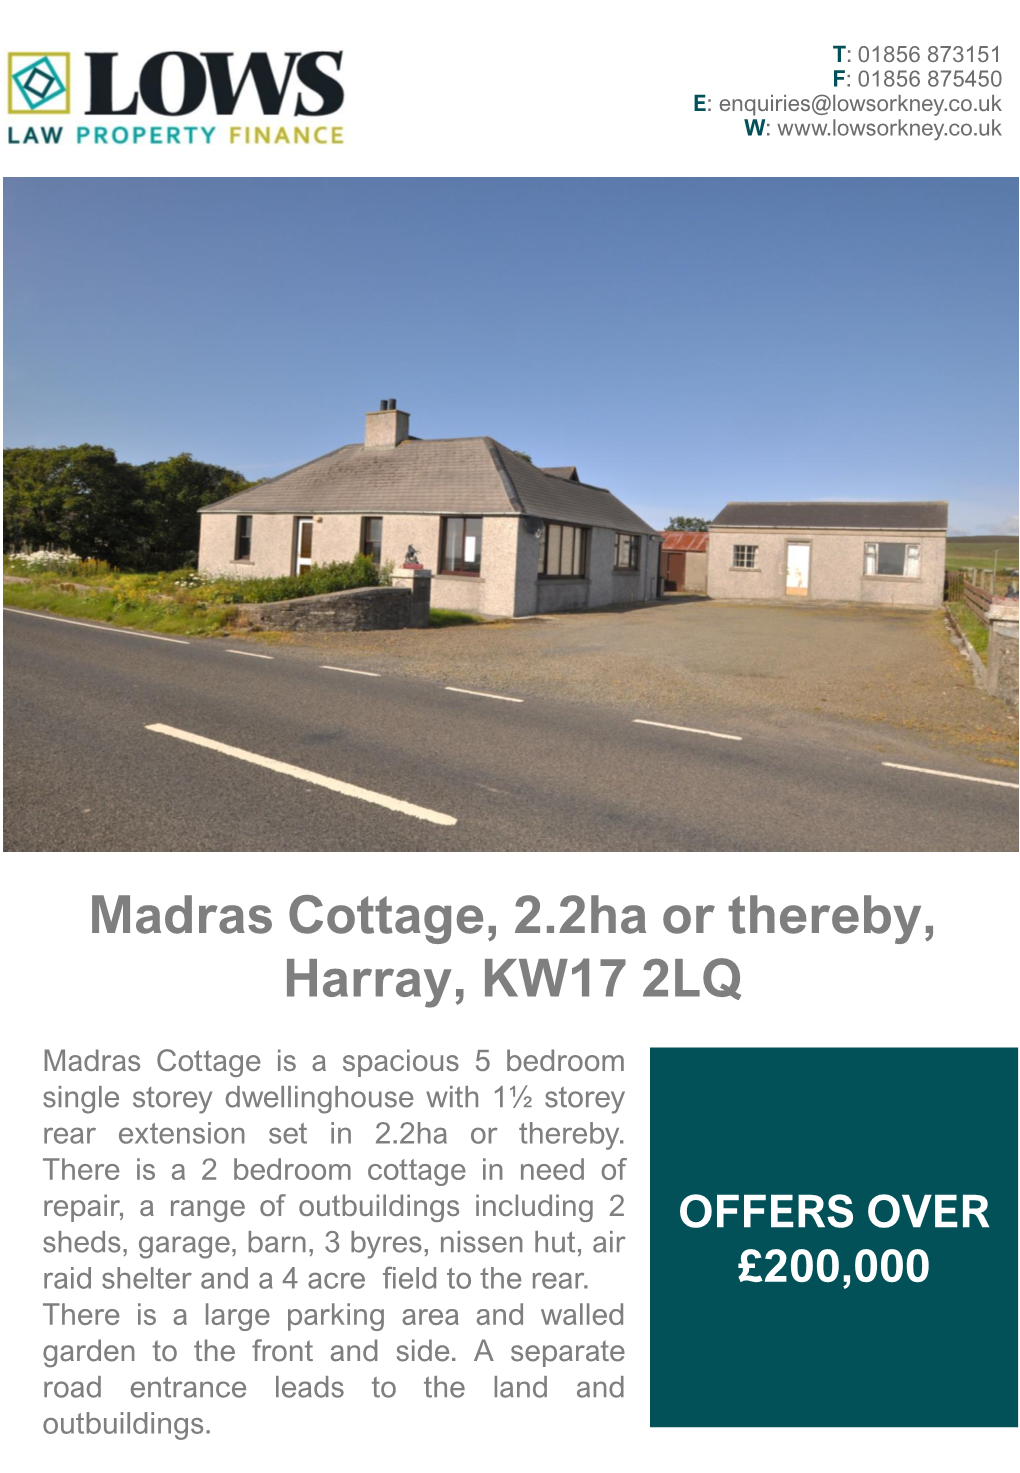 Madras Cottage, Harray